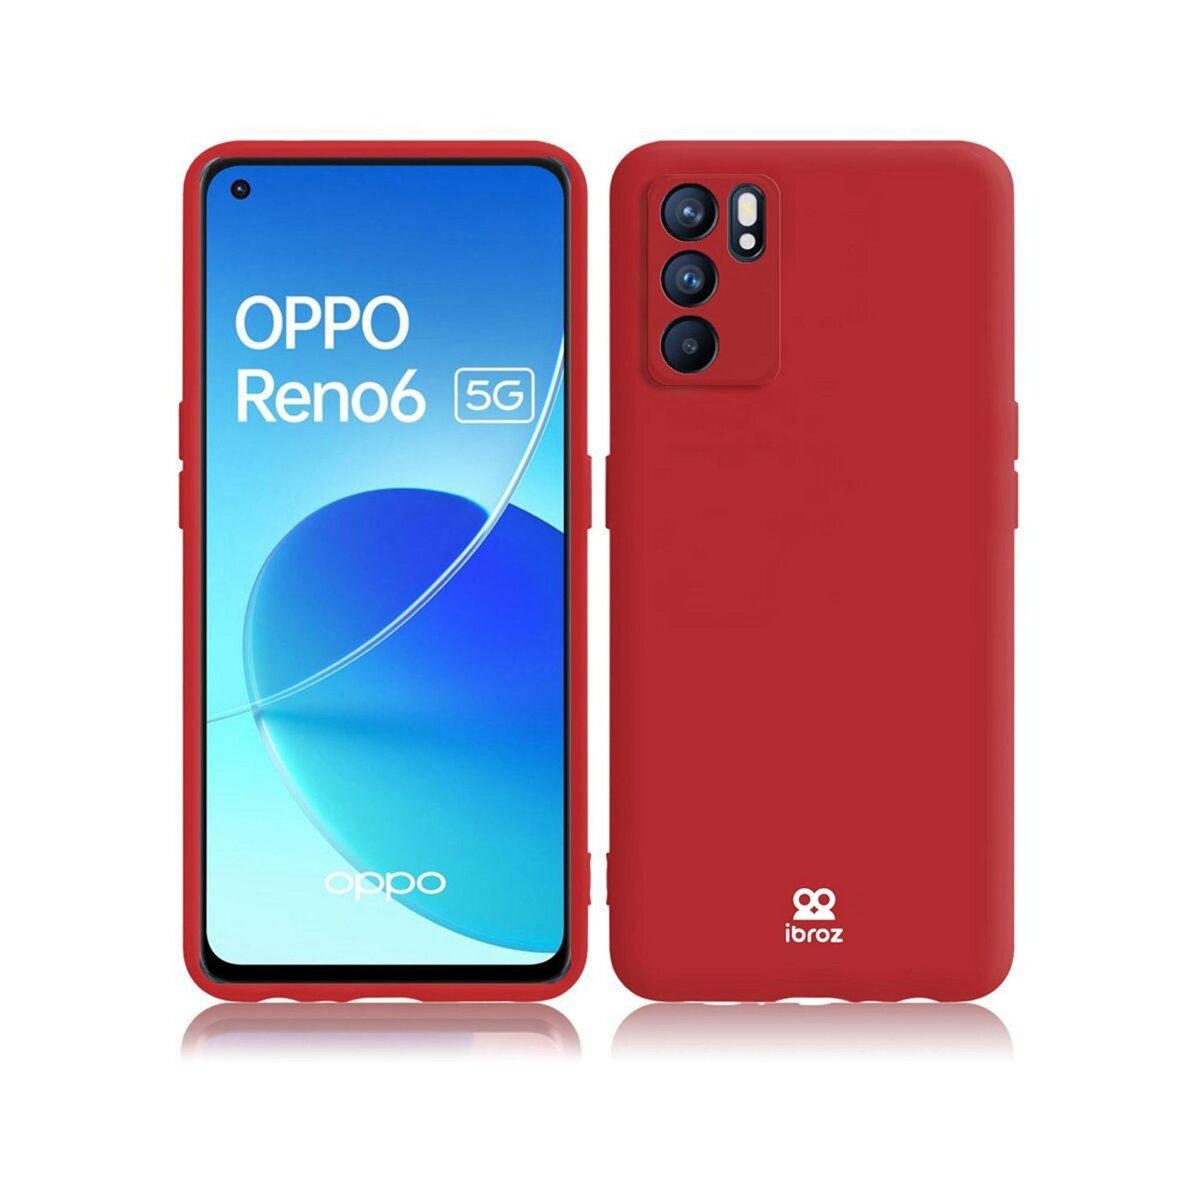 IBROZ Coque Oppo Reno 6 Silicone rouge